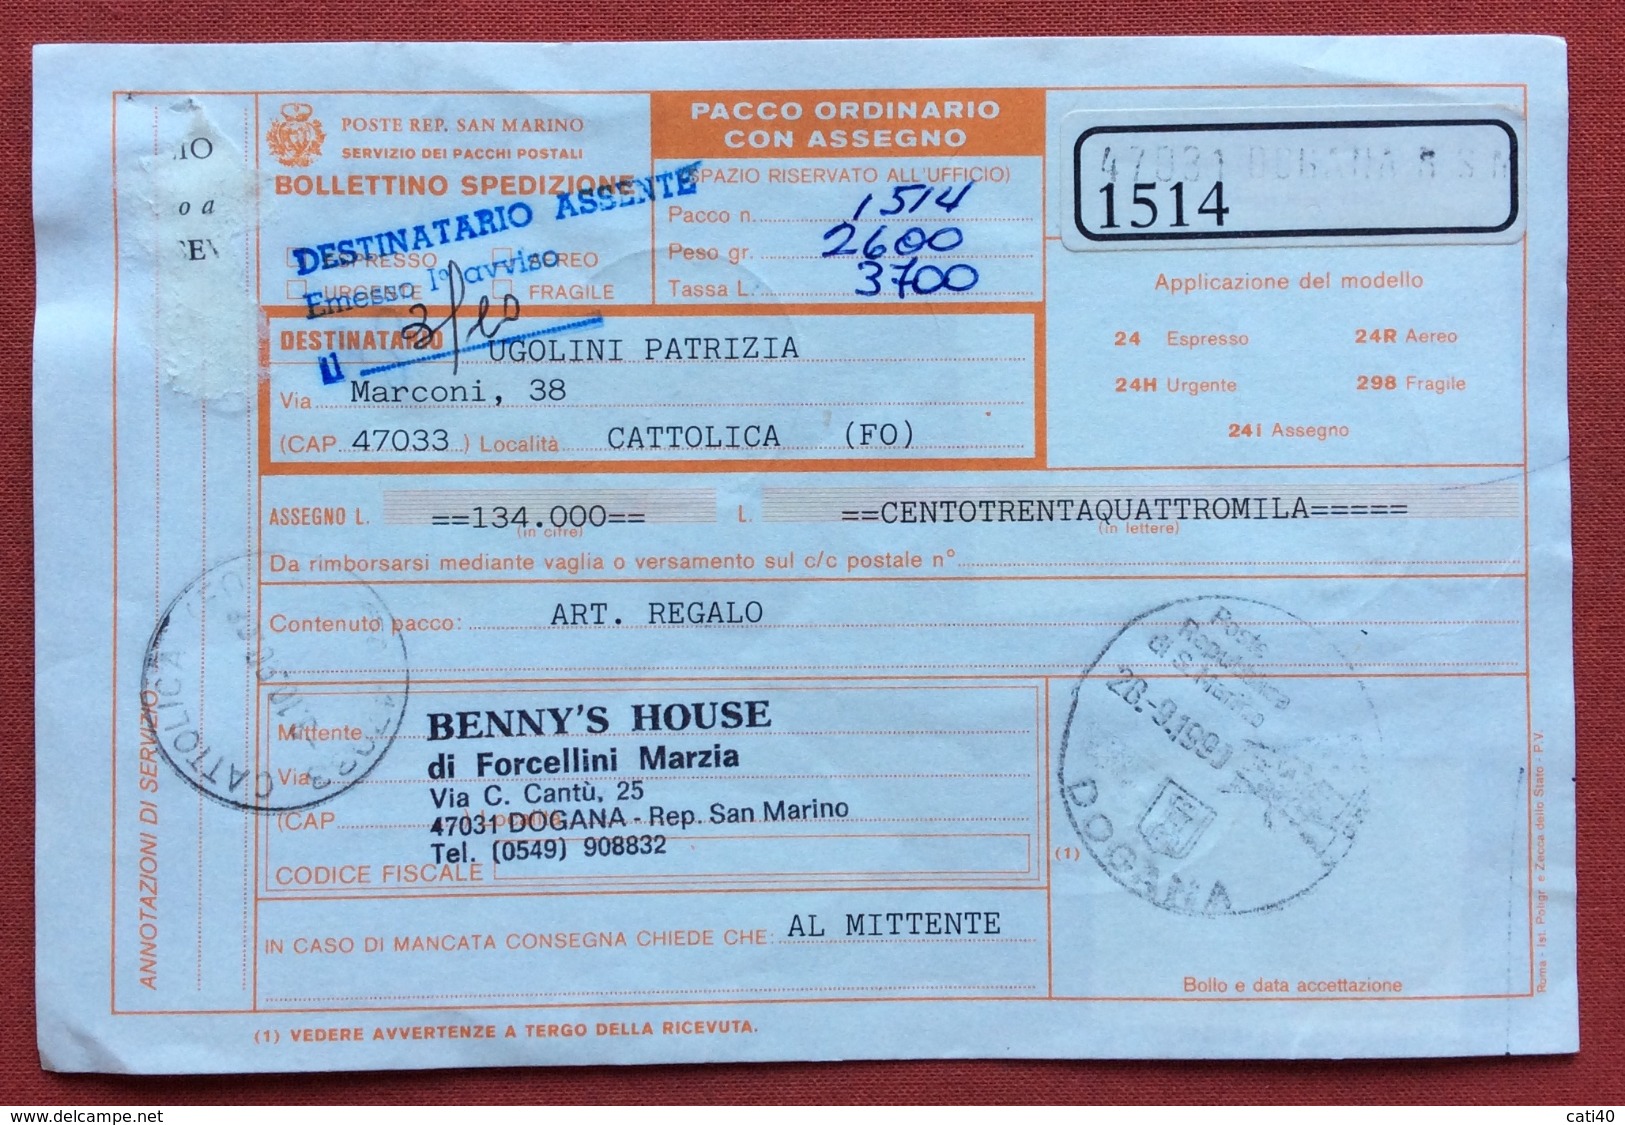 SAN MARINO BOLLETTINO PACCO ORDINARIO CON ASSEGNO  CON L.1500+1500+700  ANNULLO S.MARINO DOGANA 28/9/90 - Variedades Y Curiosidades